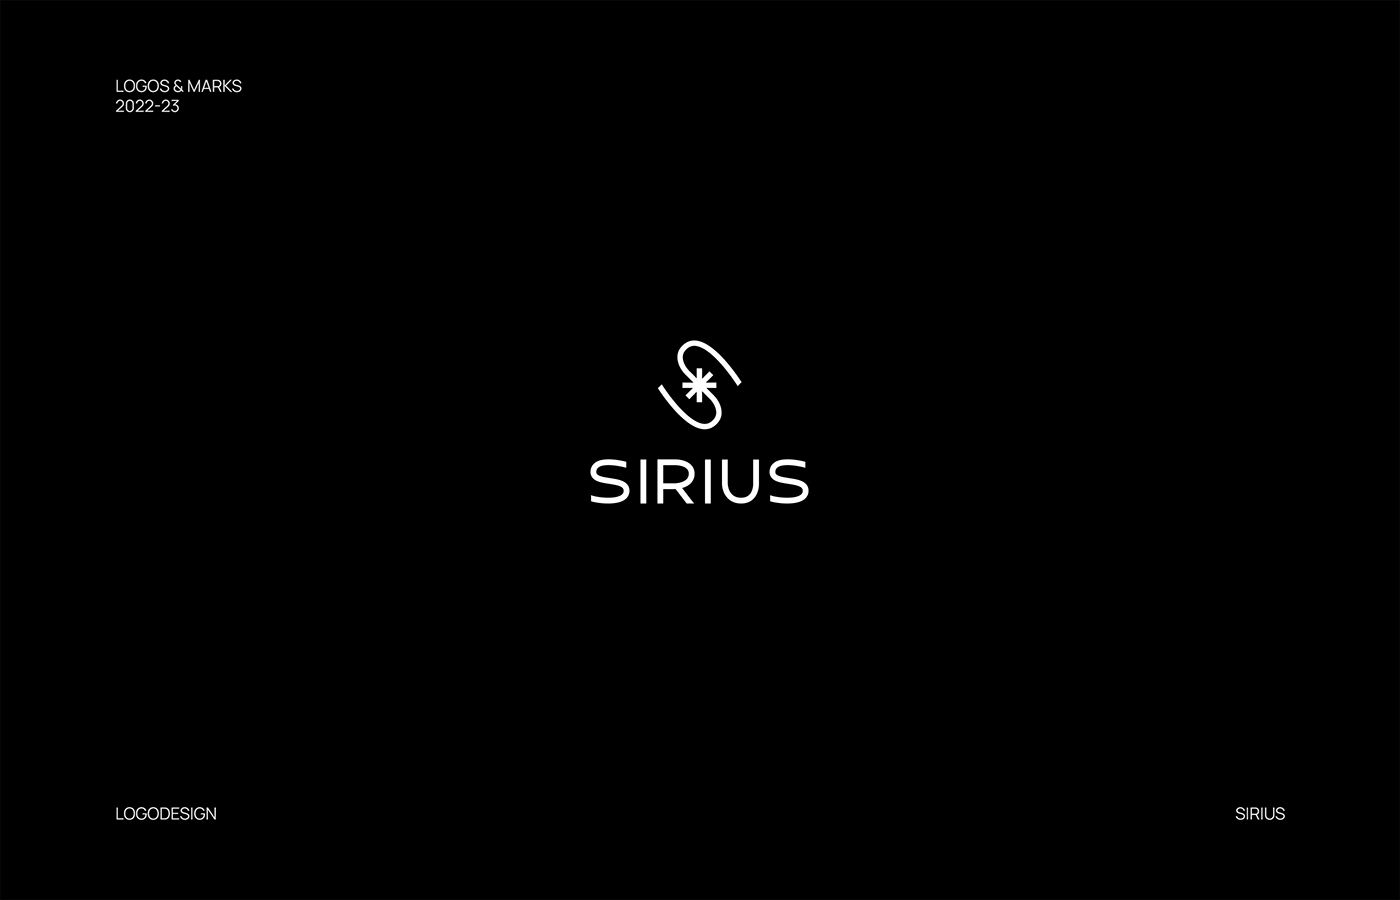 Sirius - logo for clothing brand